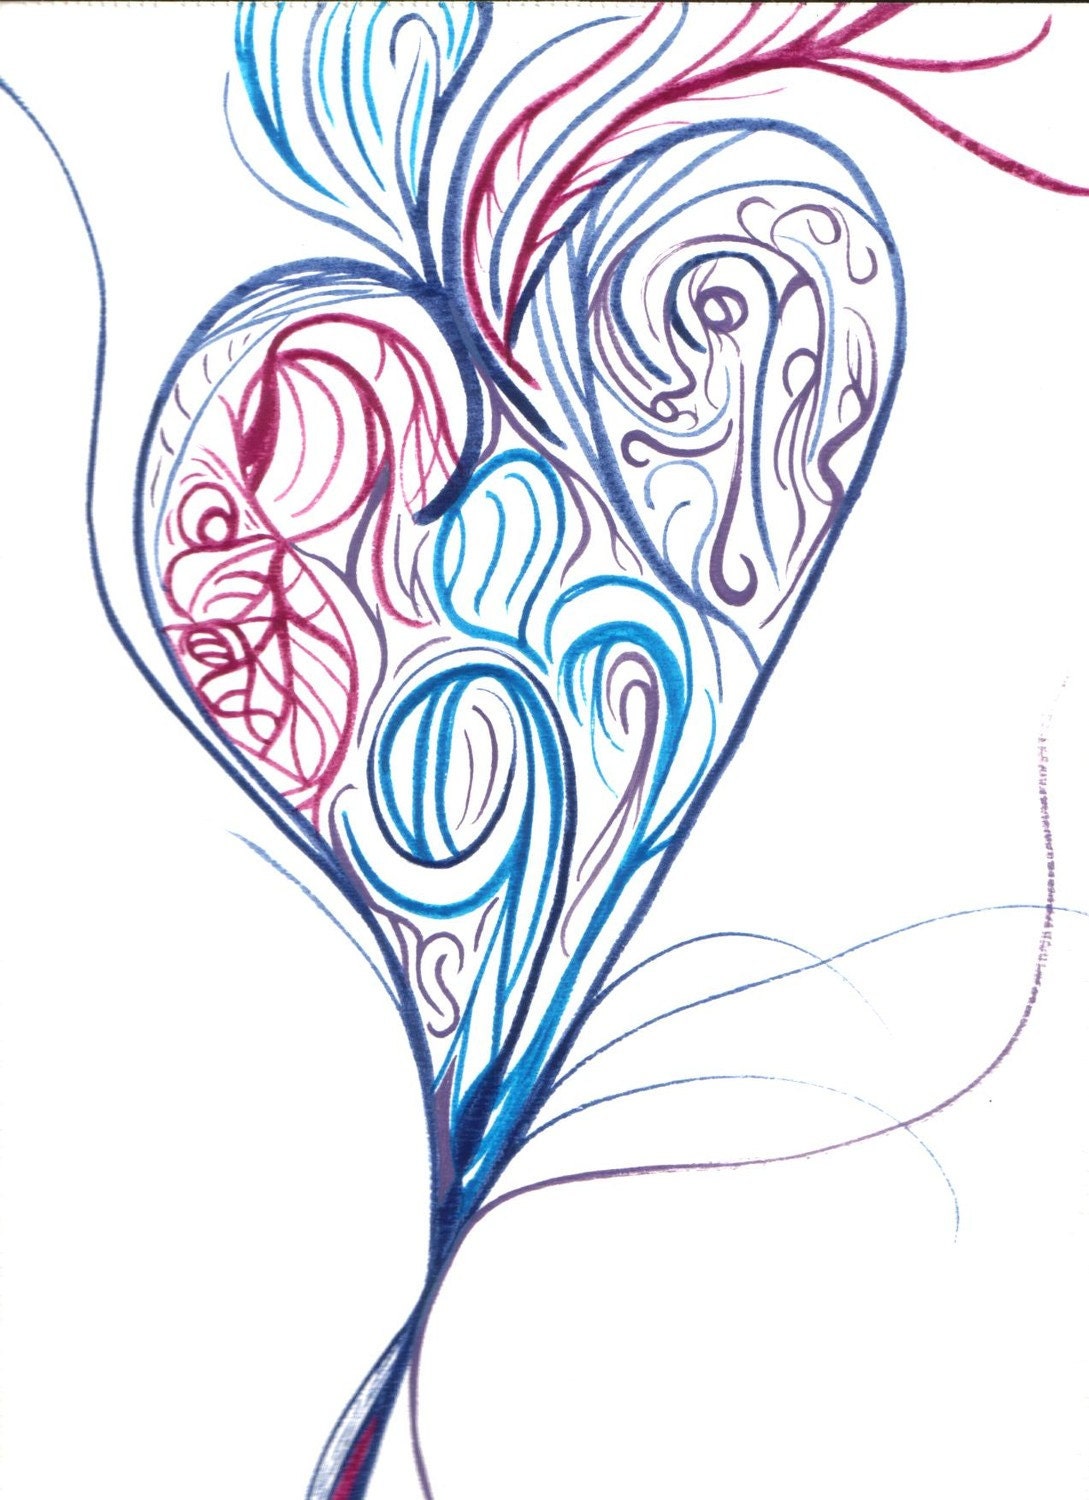 Blue & Purple Heart Painting - Original Signed Watercolour 9x12